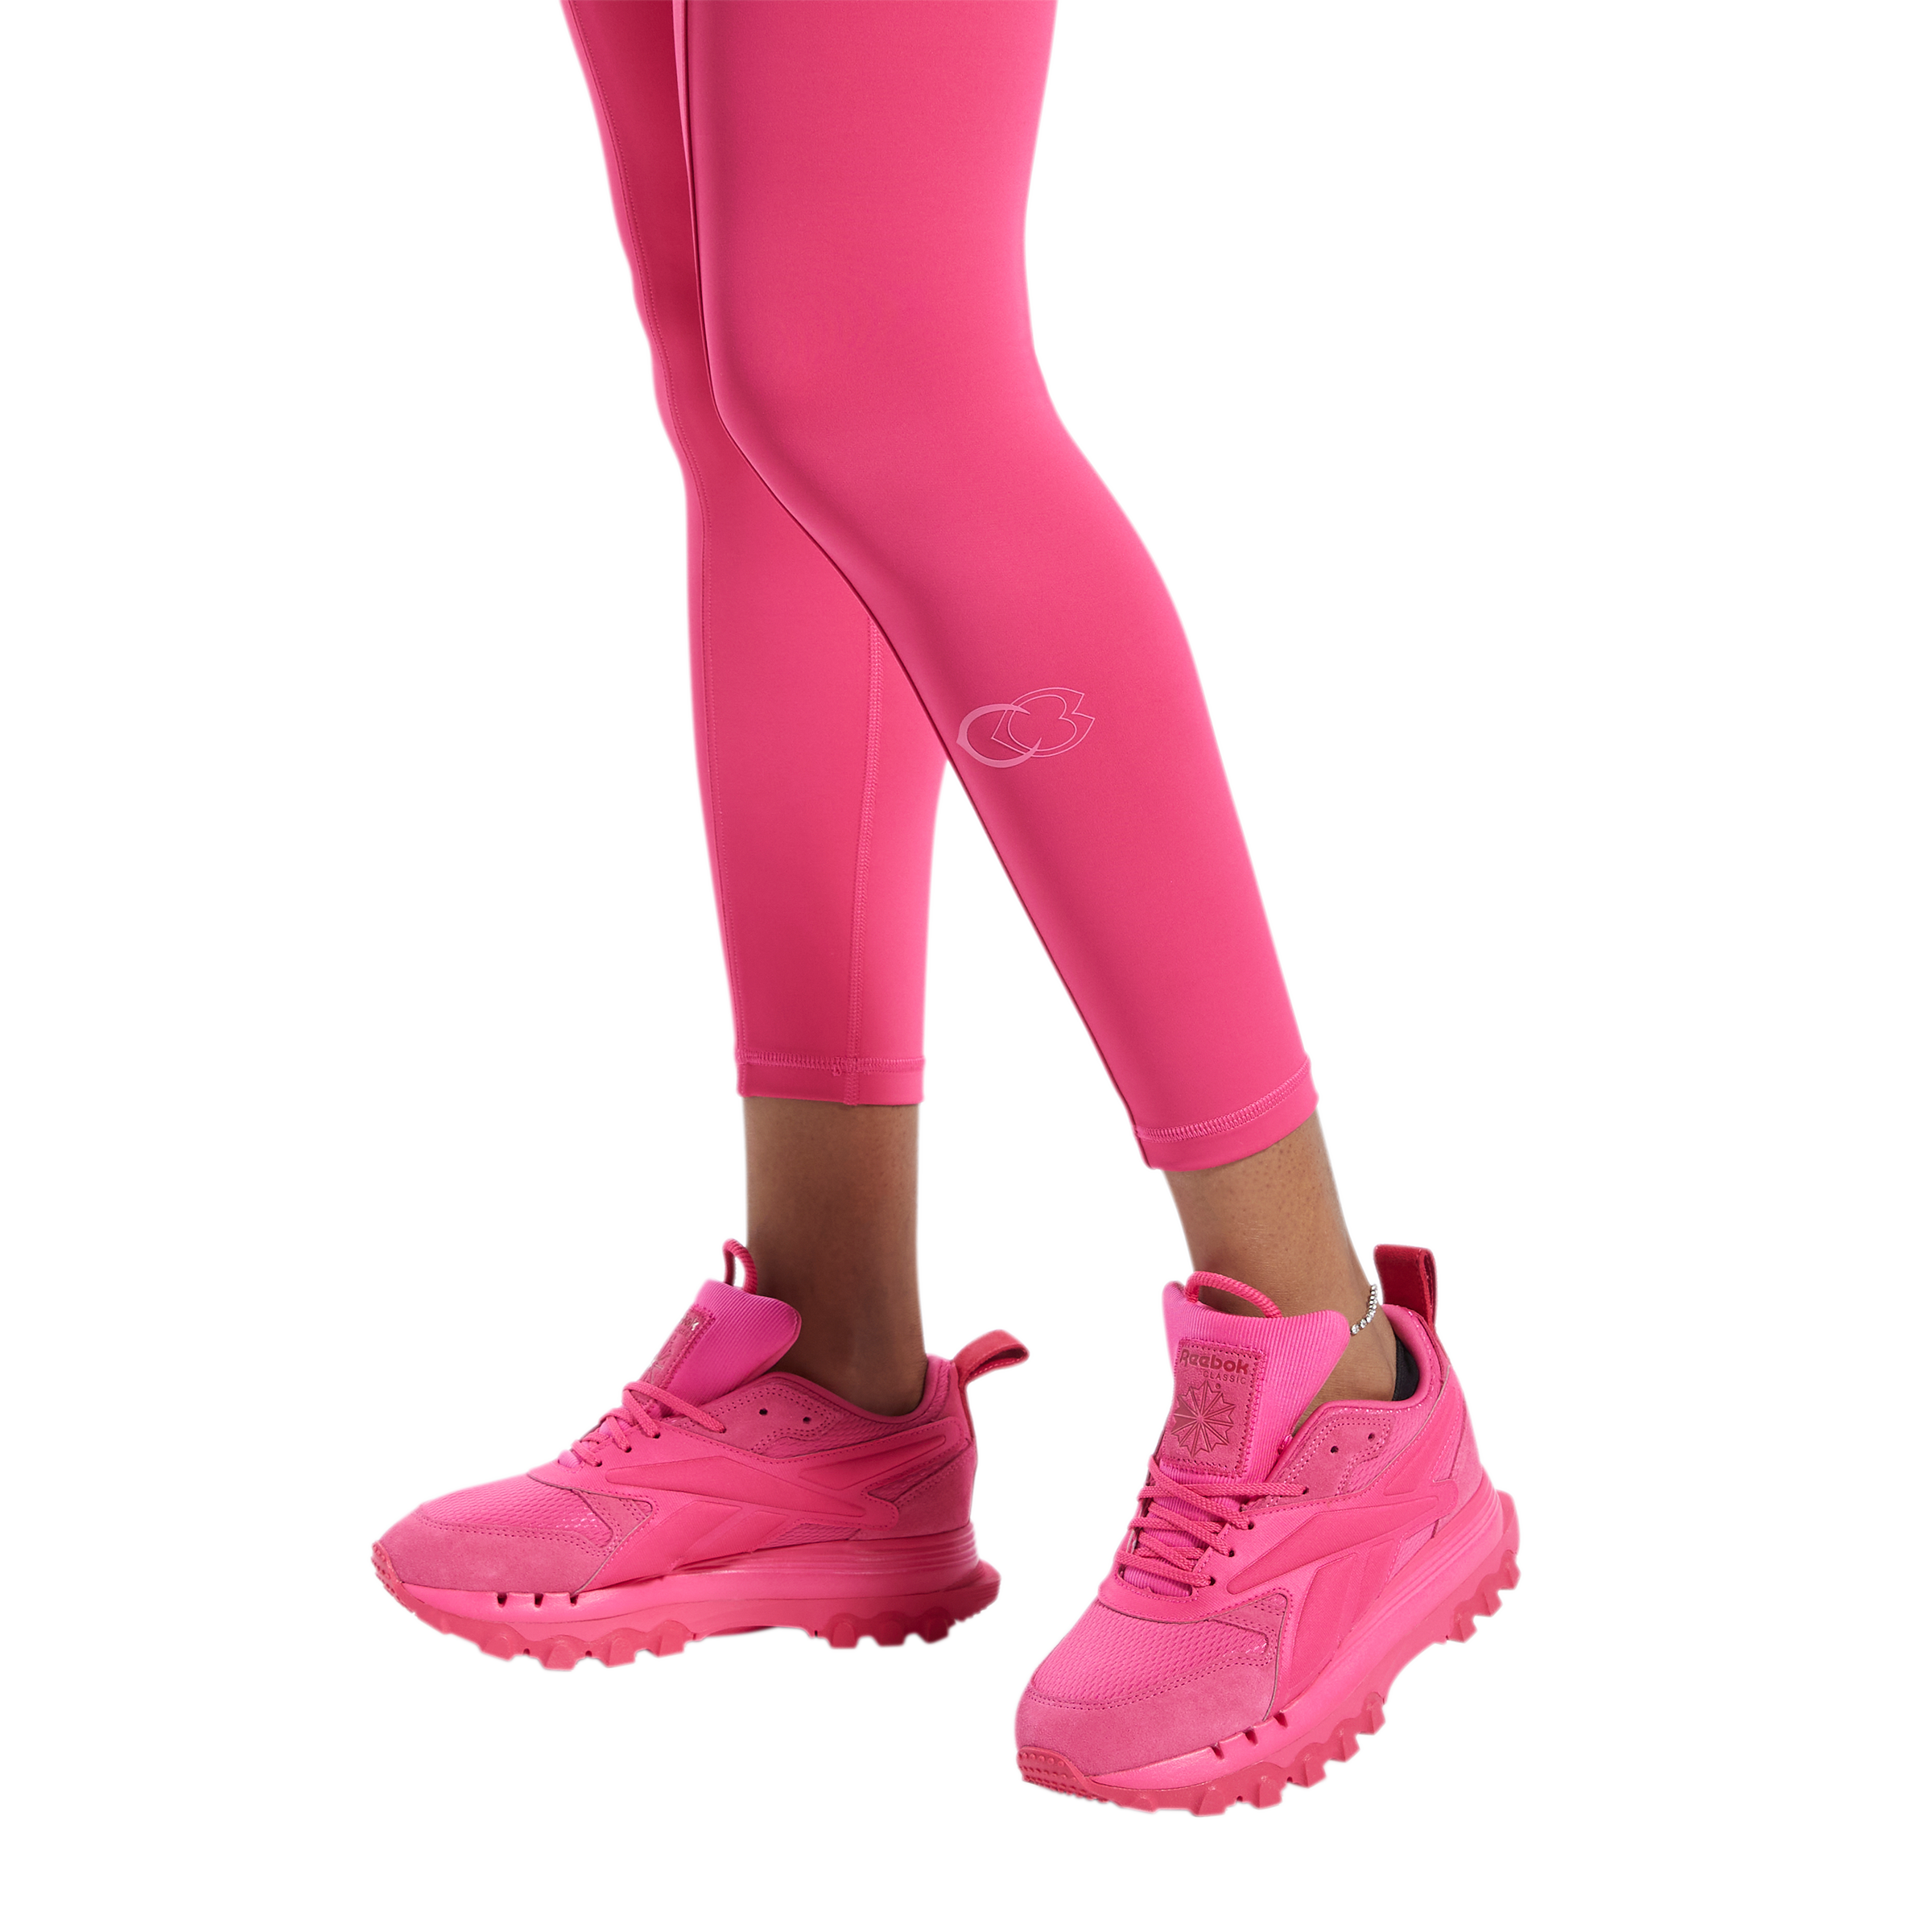 Reebok Women's x Cardi B High-Rise Leggings-Pink - Hibbett